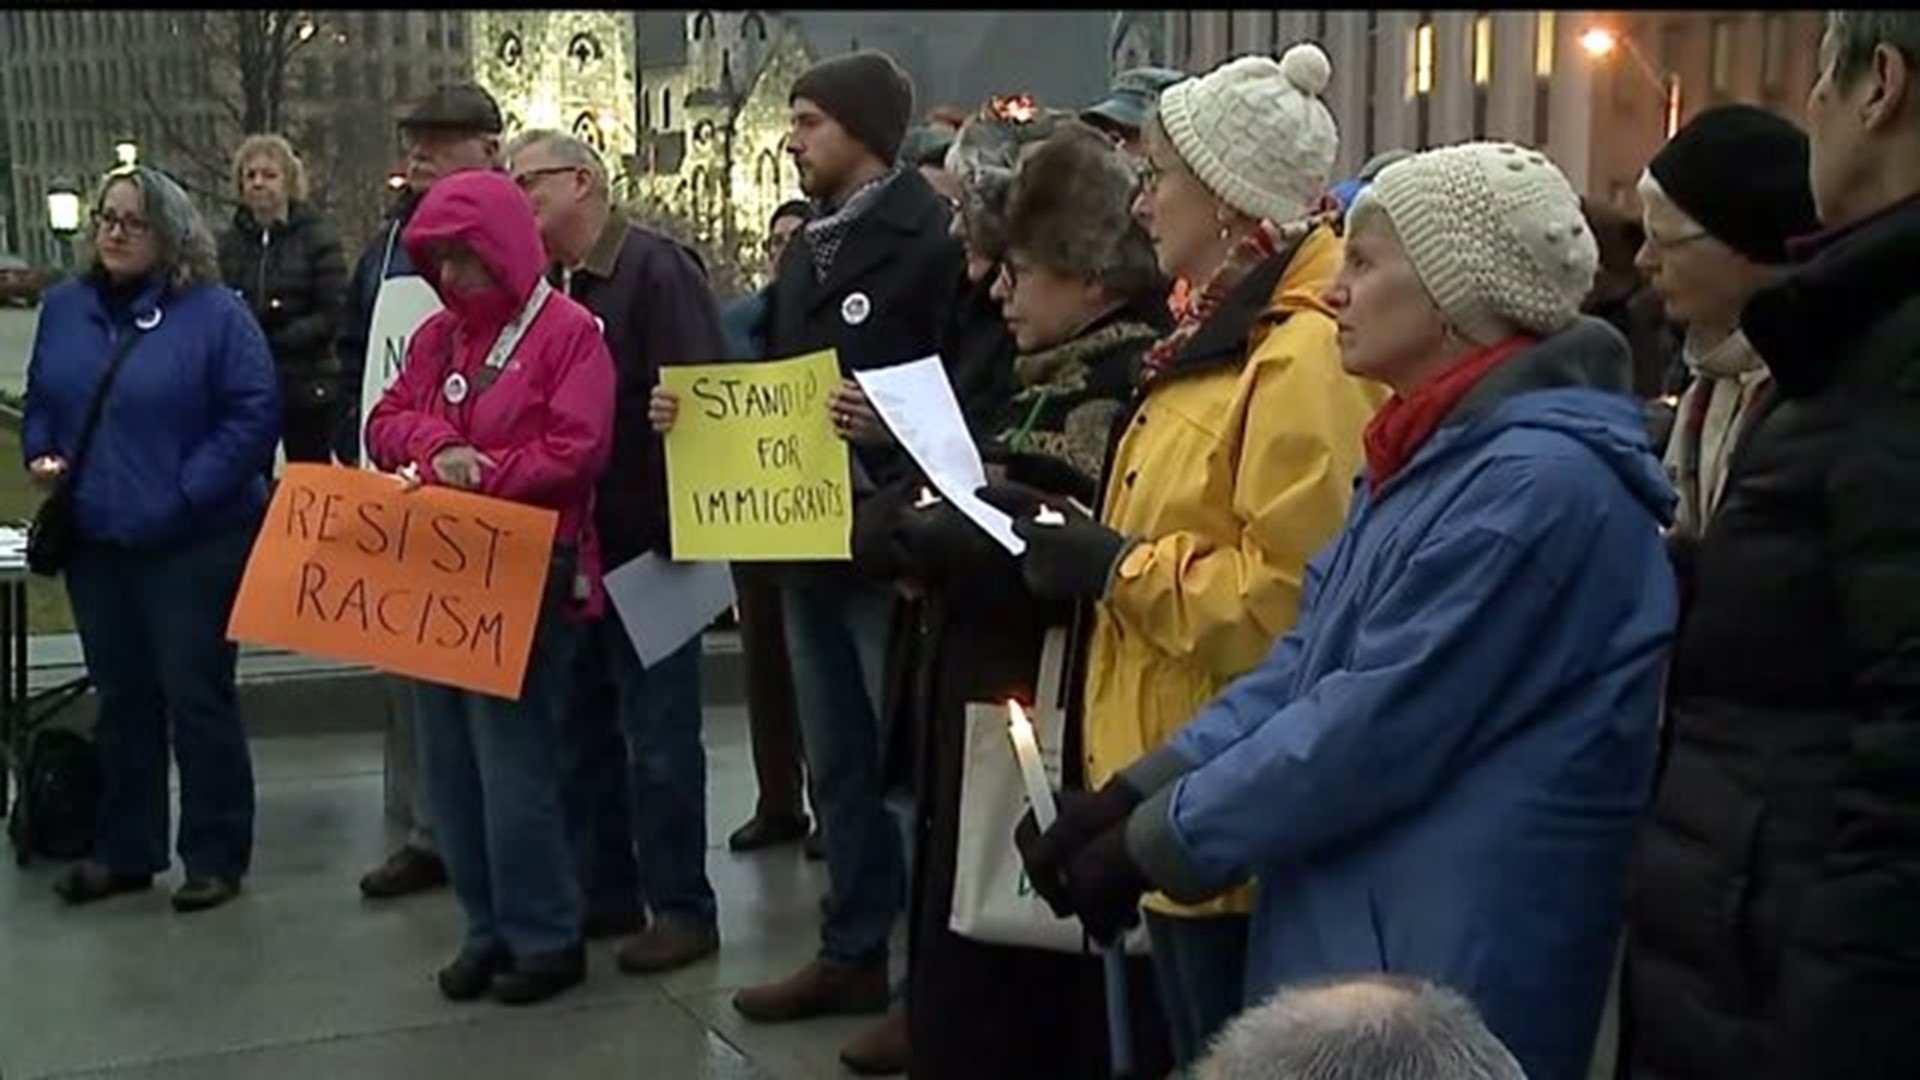 Demonstrators hold vigil to organize resistance against Trump